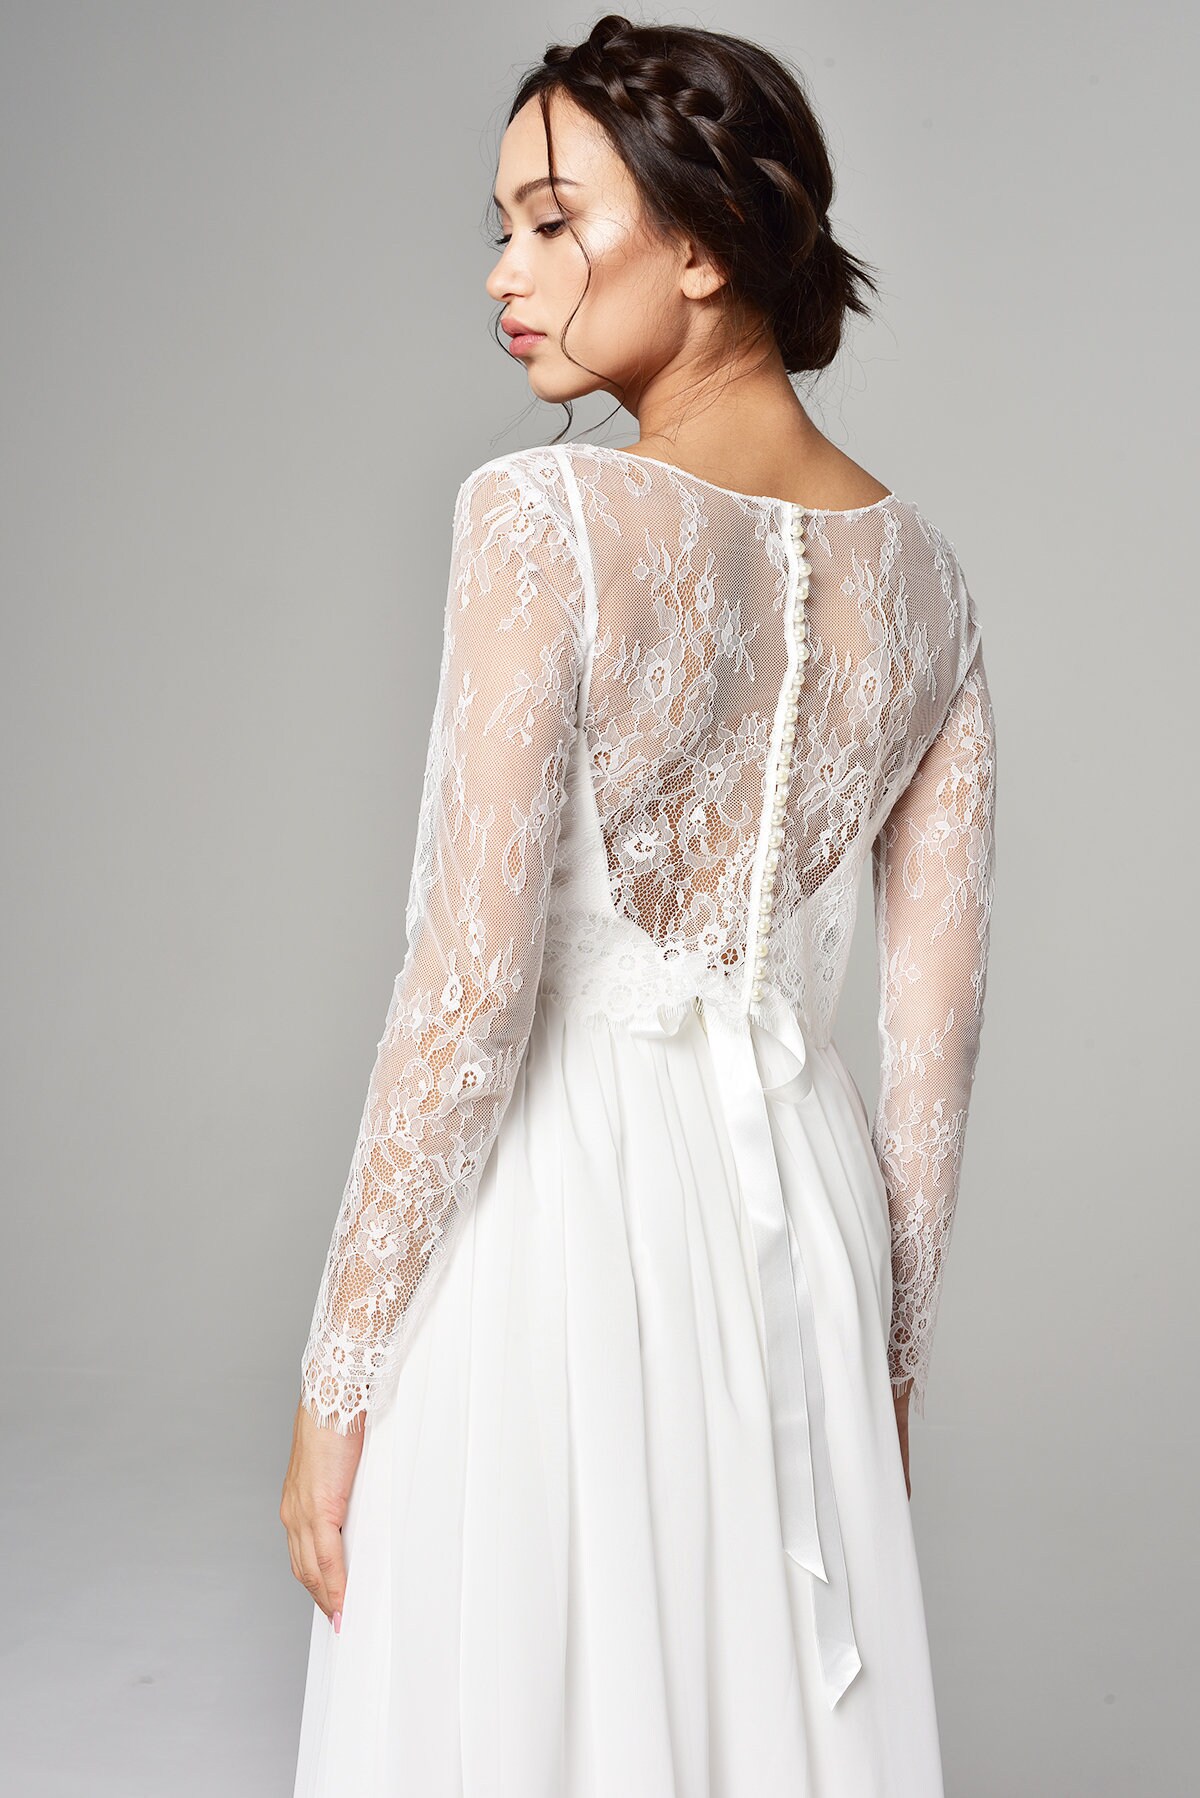 Chiffon wedding dress lace top Long sleeve boho bridal gown | Etsy